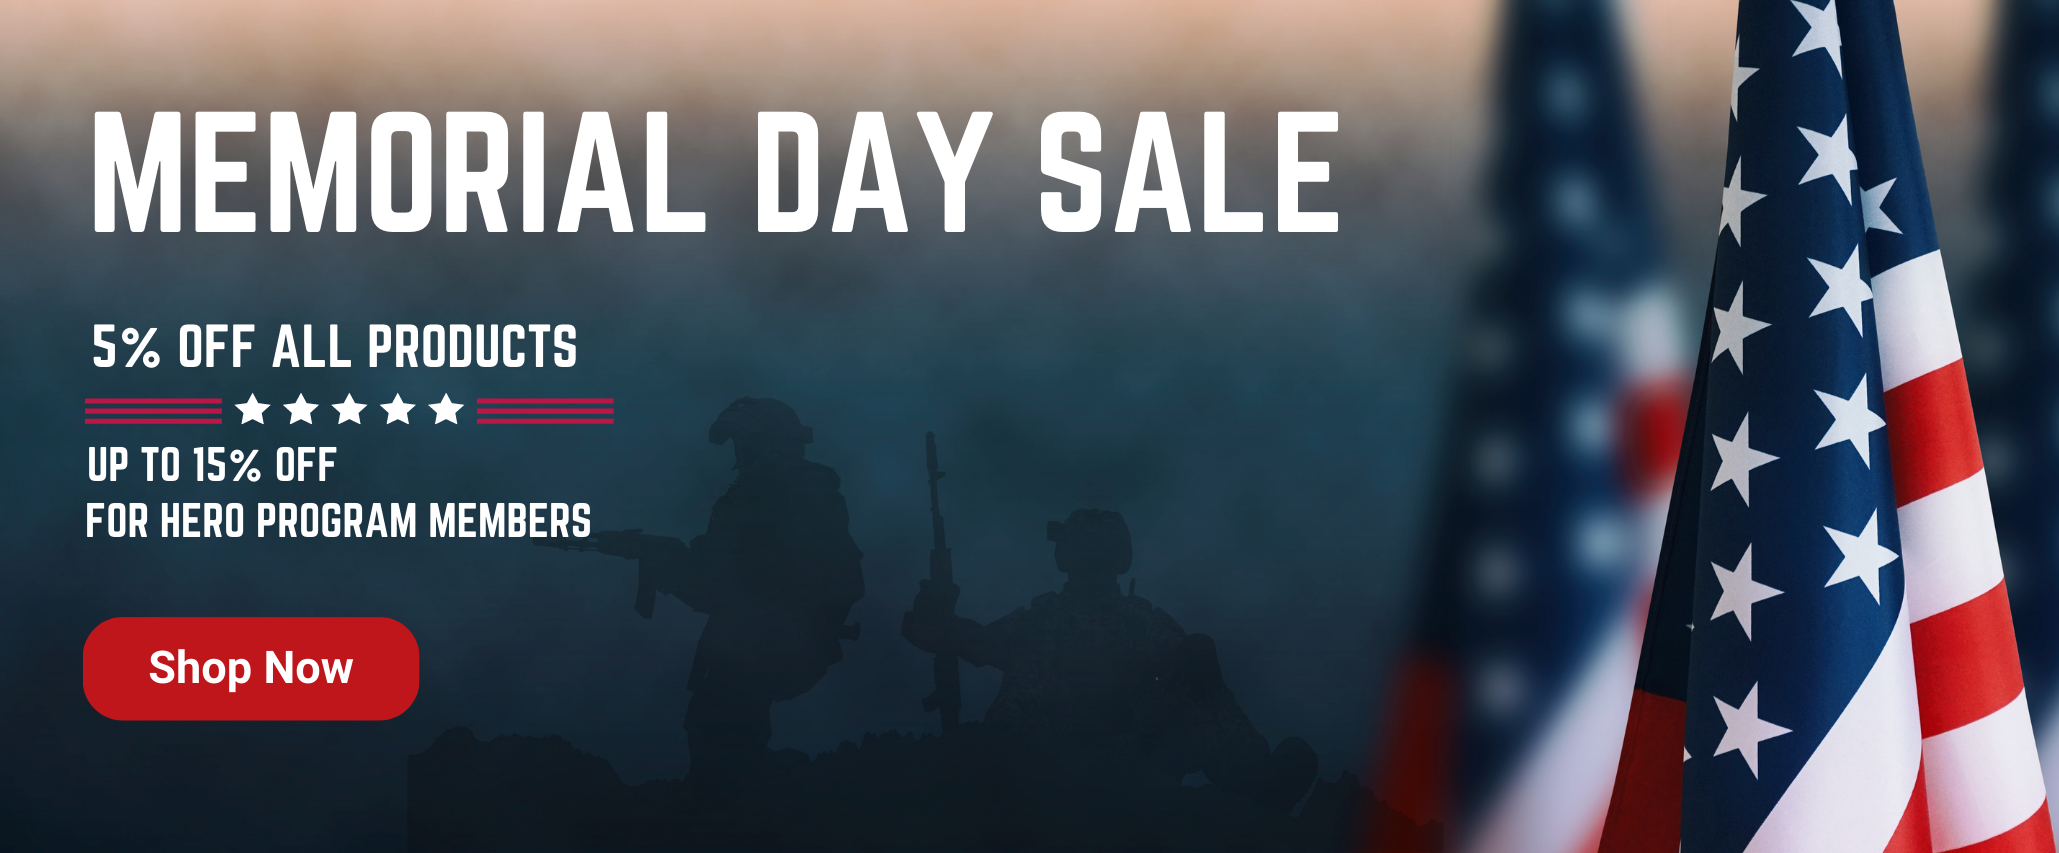 MP5 Memorial Day Sale